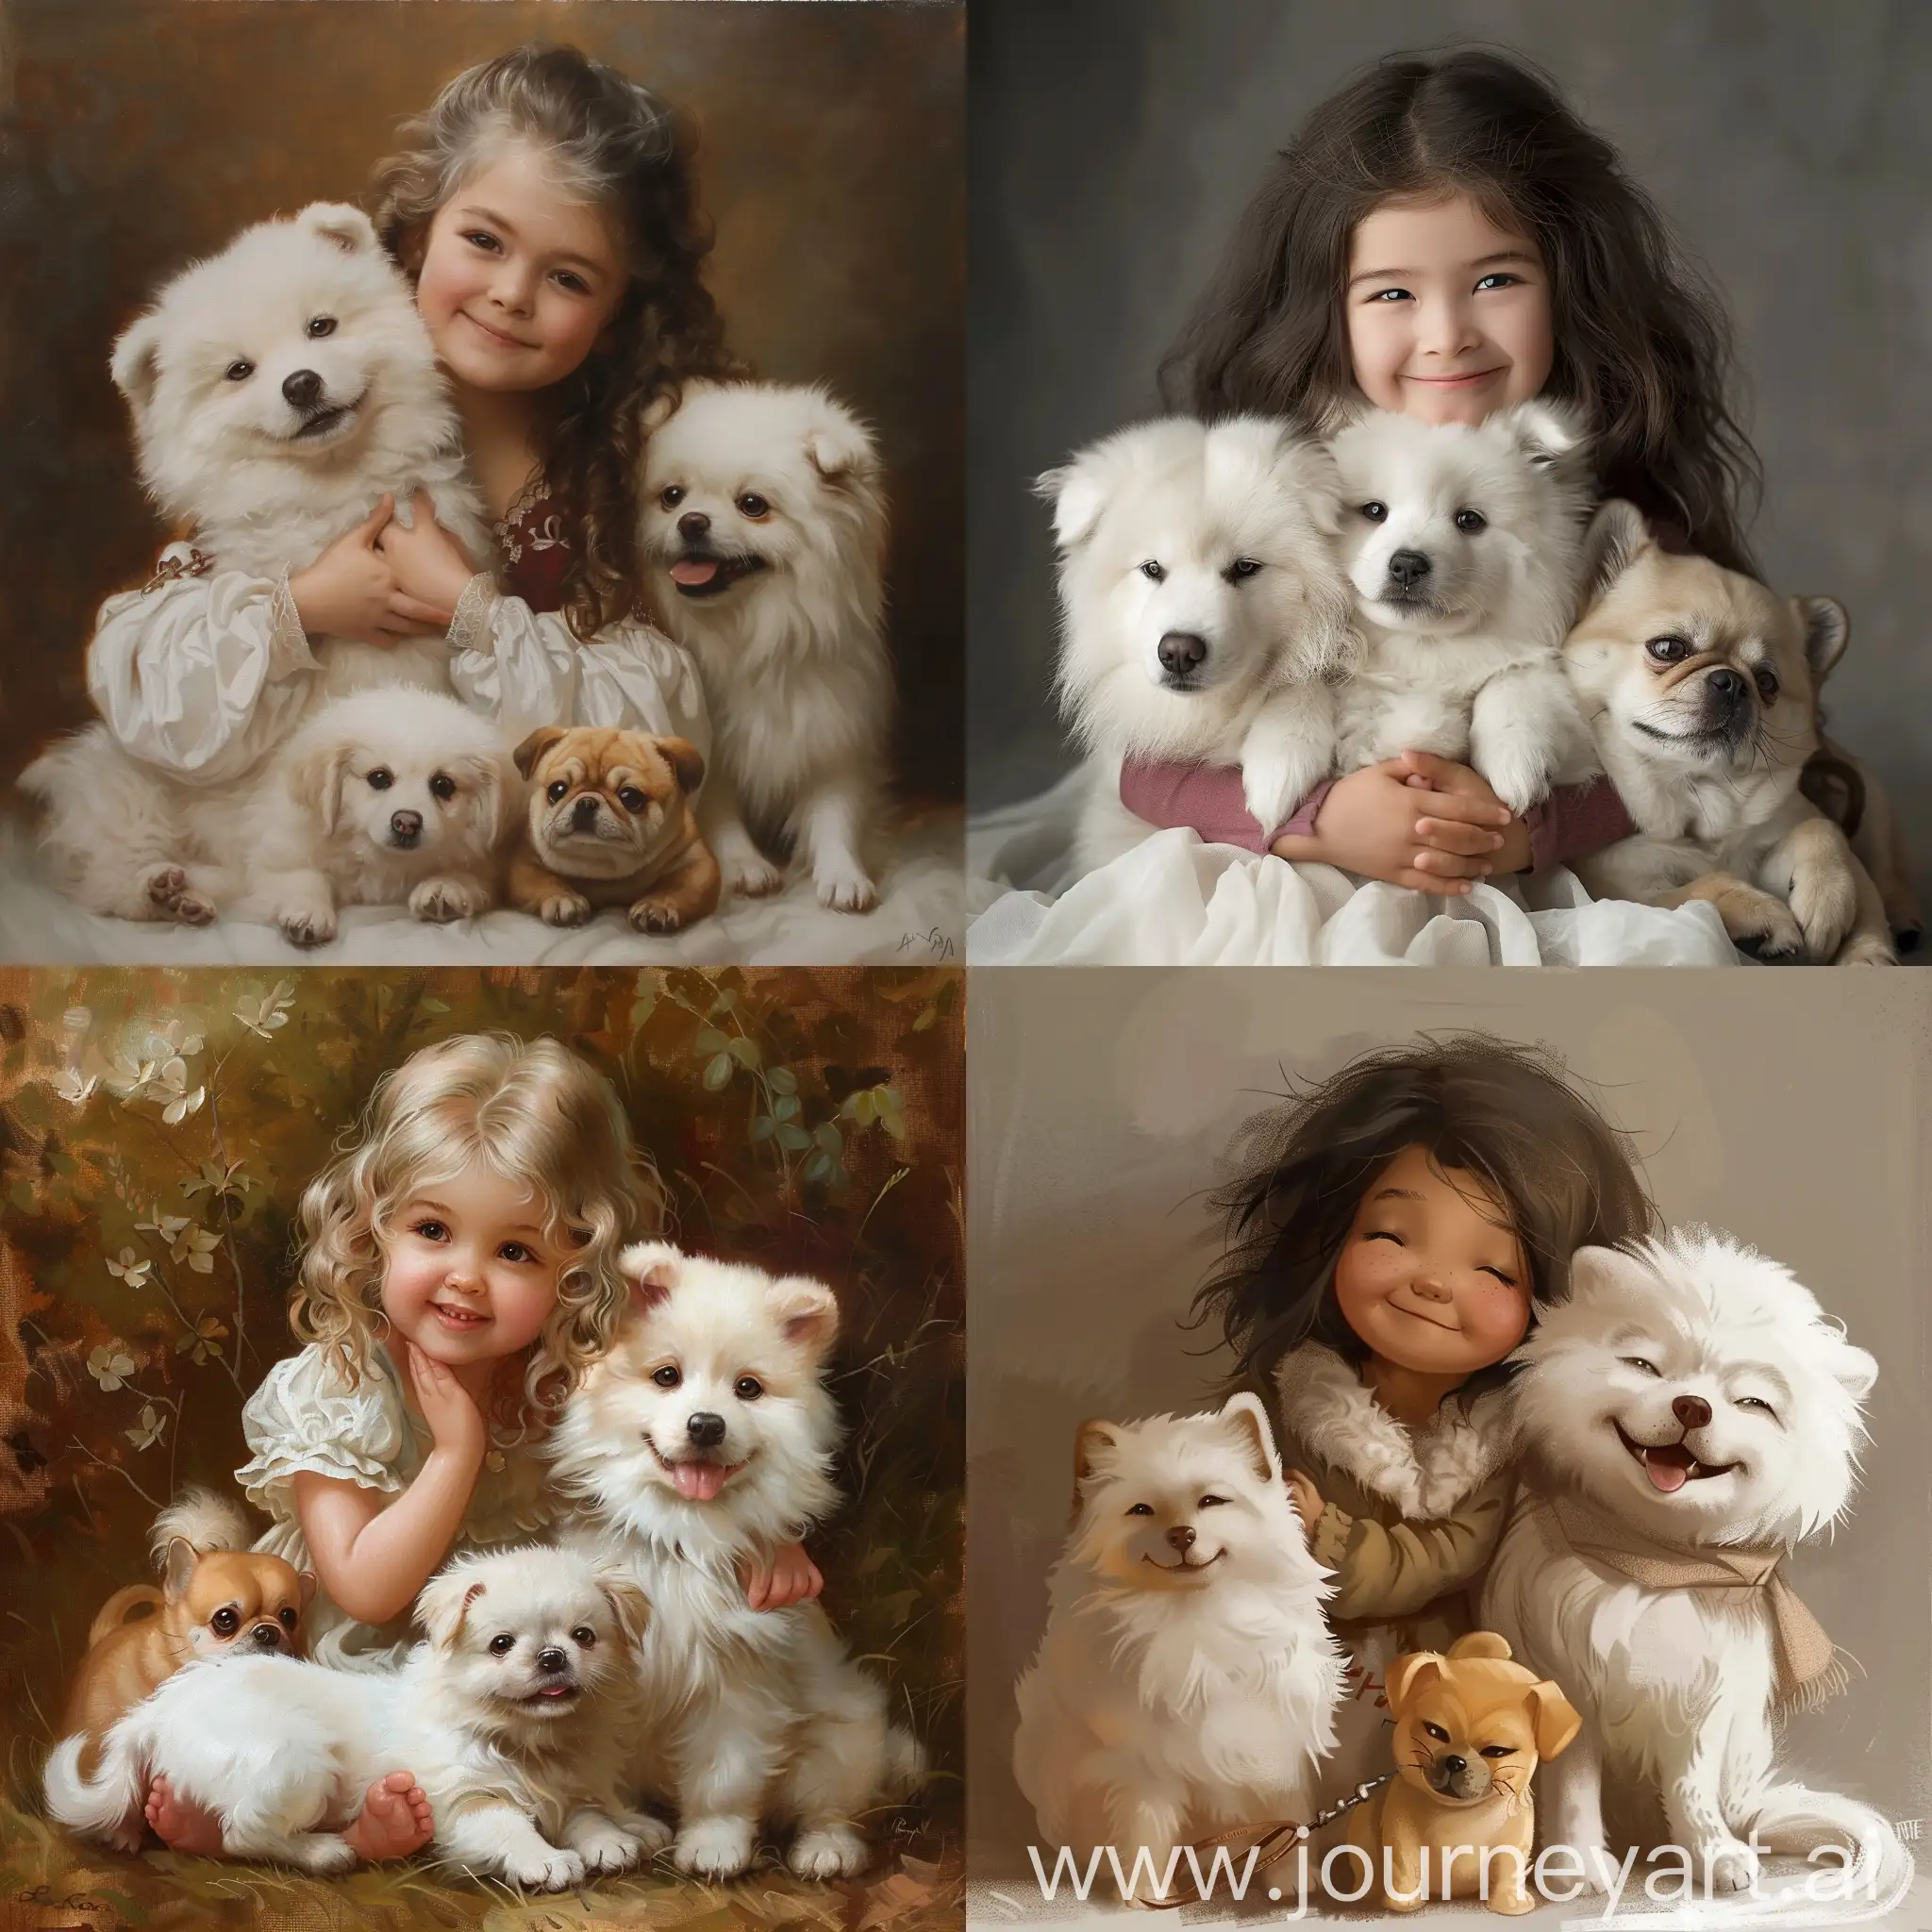 Playful-Little-Girl-with-Samoyed-and-Pekingese-Dogs